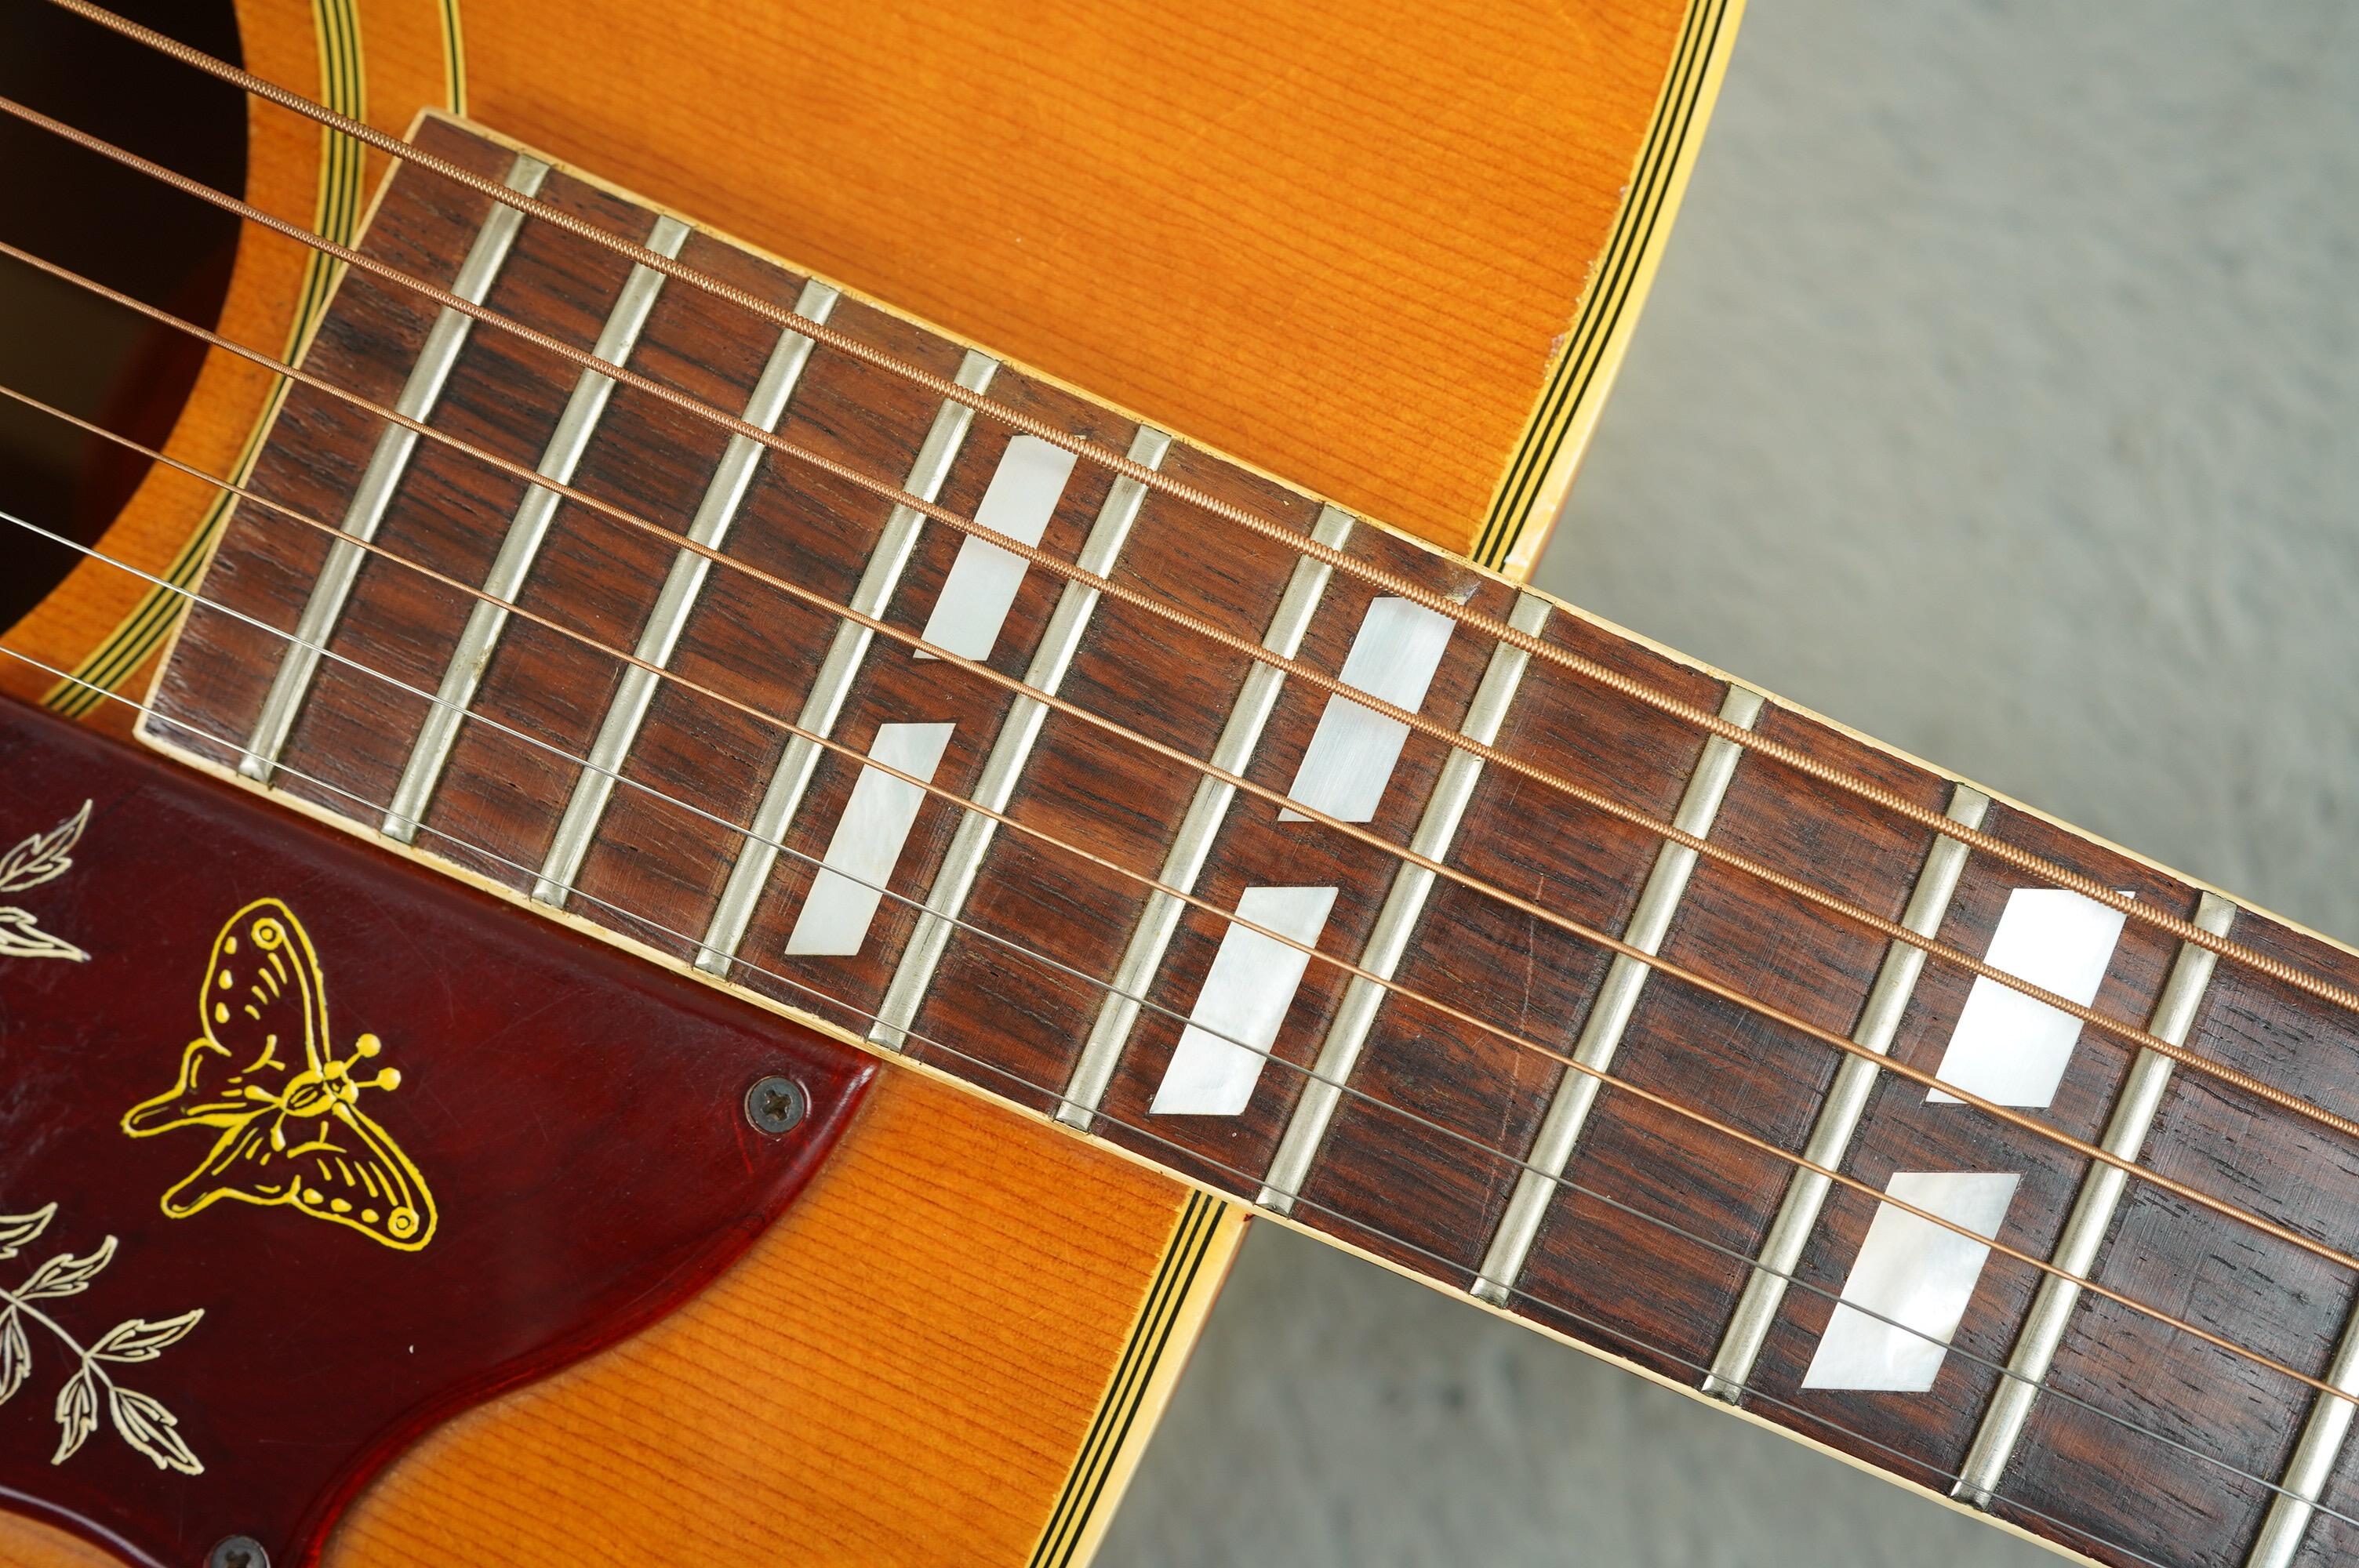 1968 Gibson Hummingbird